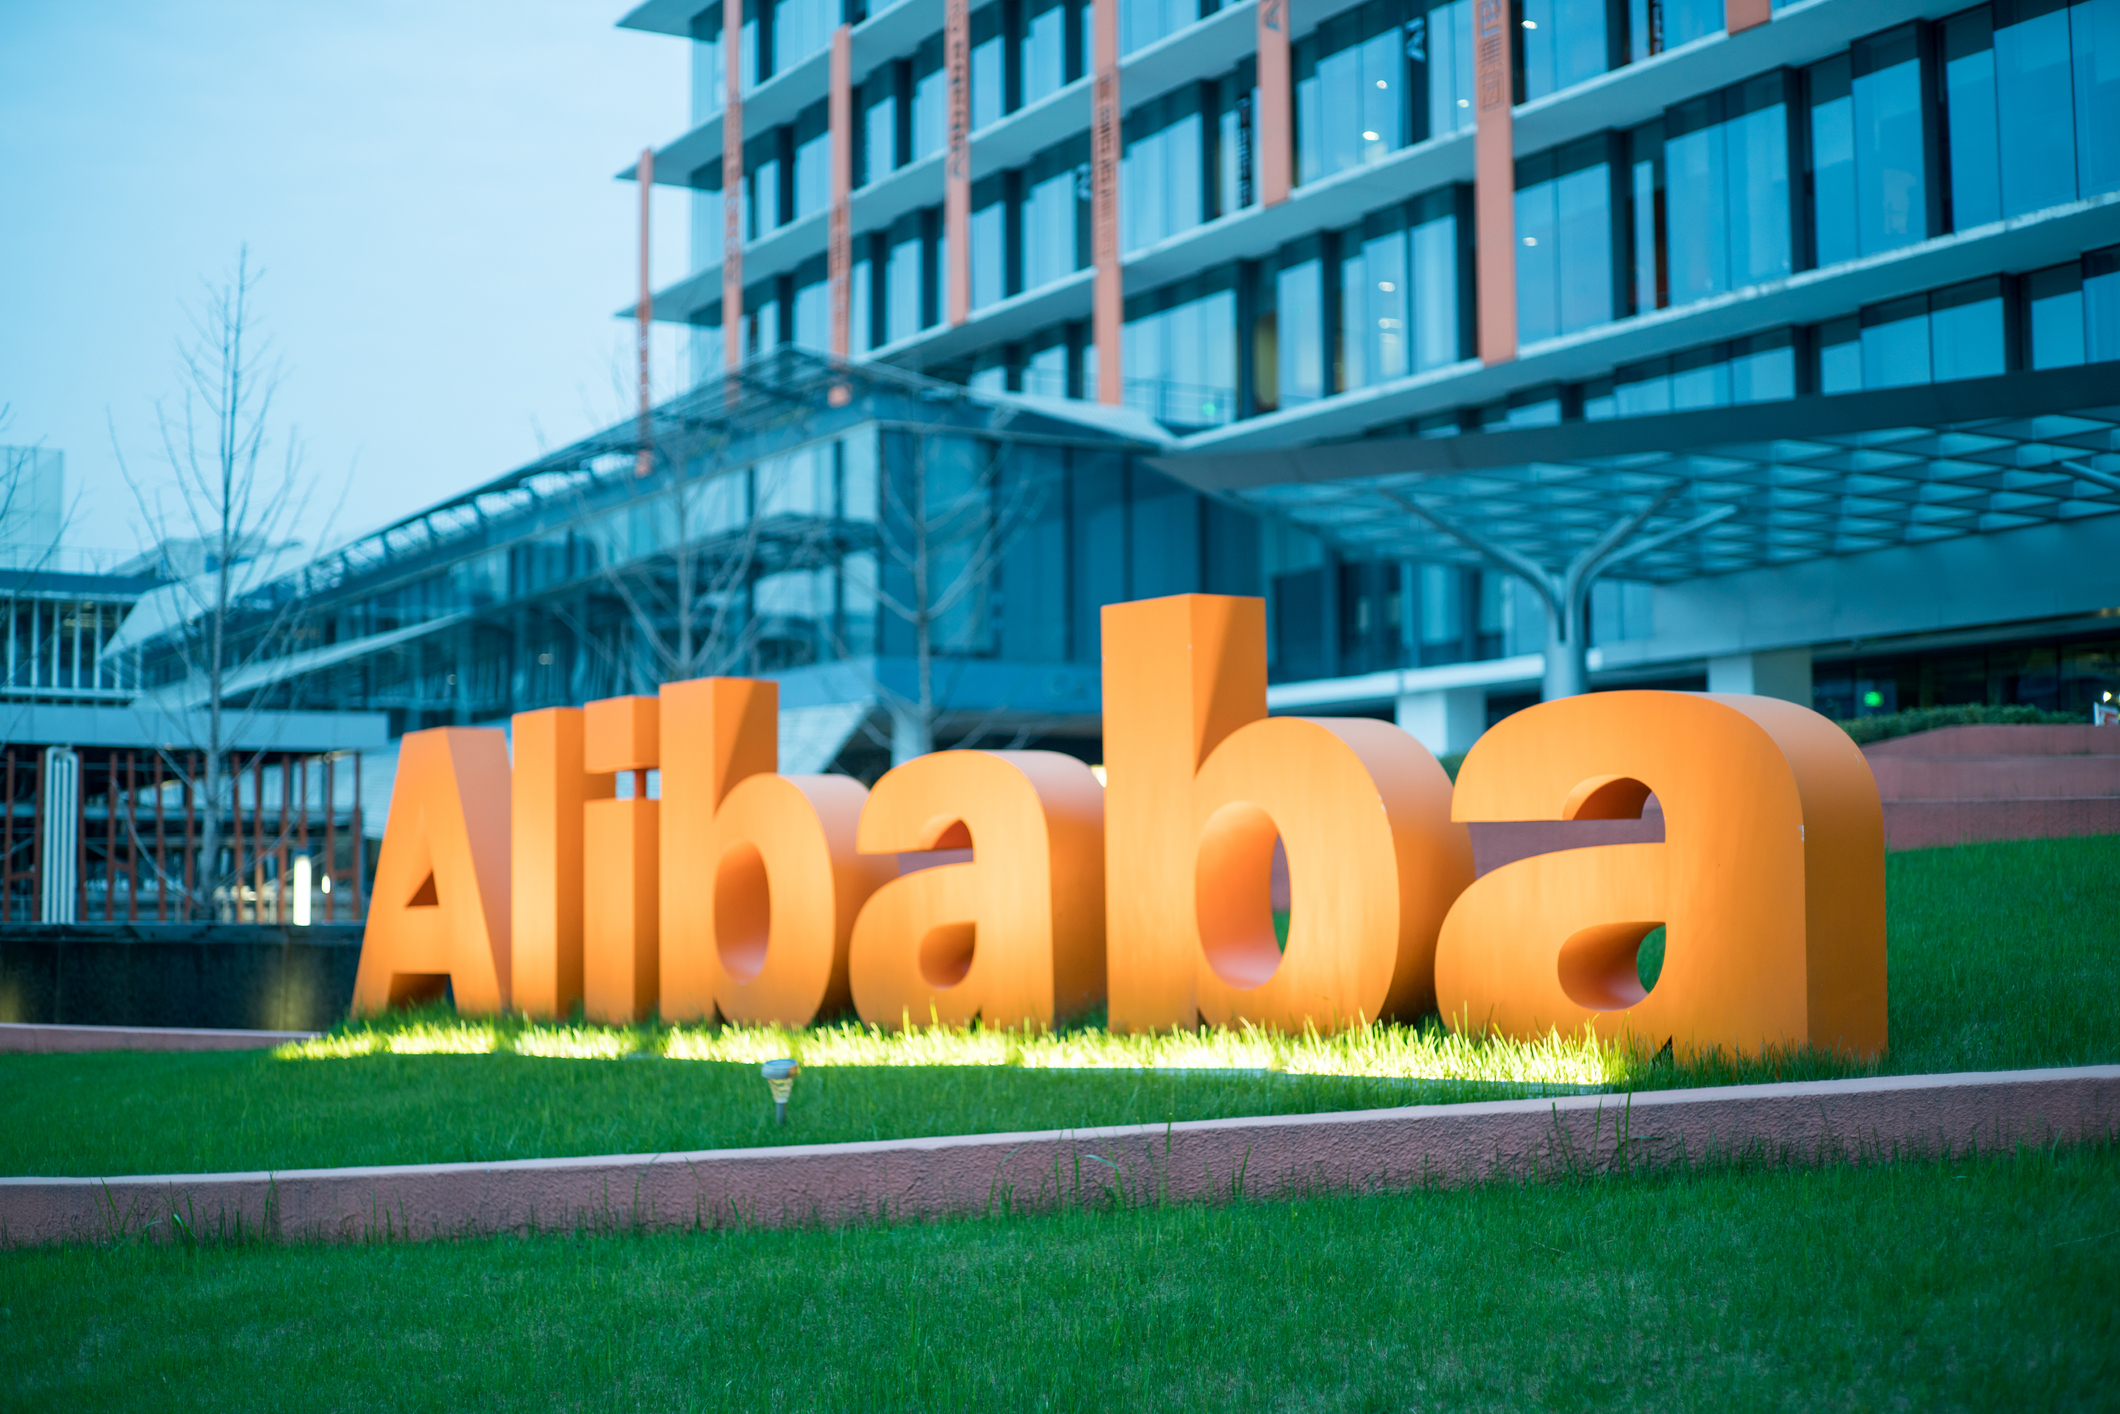 Alibaba (BABA) and Baidu (BIDU) Supply a Tempting Threat/Reward Ratio at These Ranges